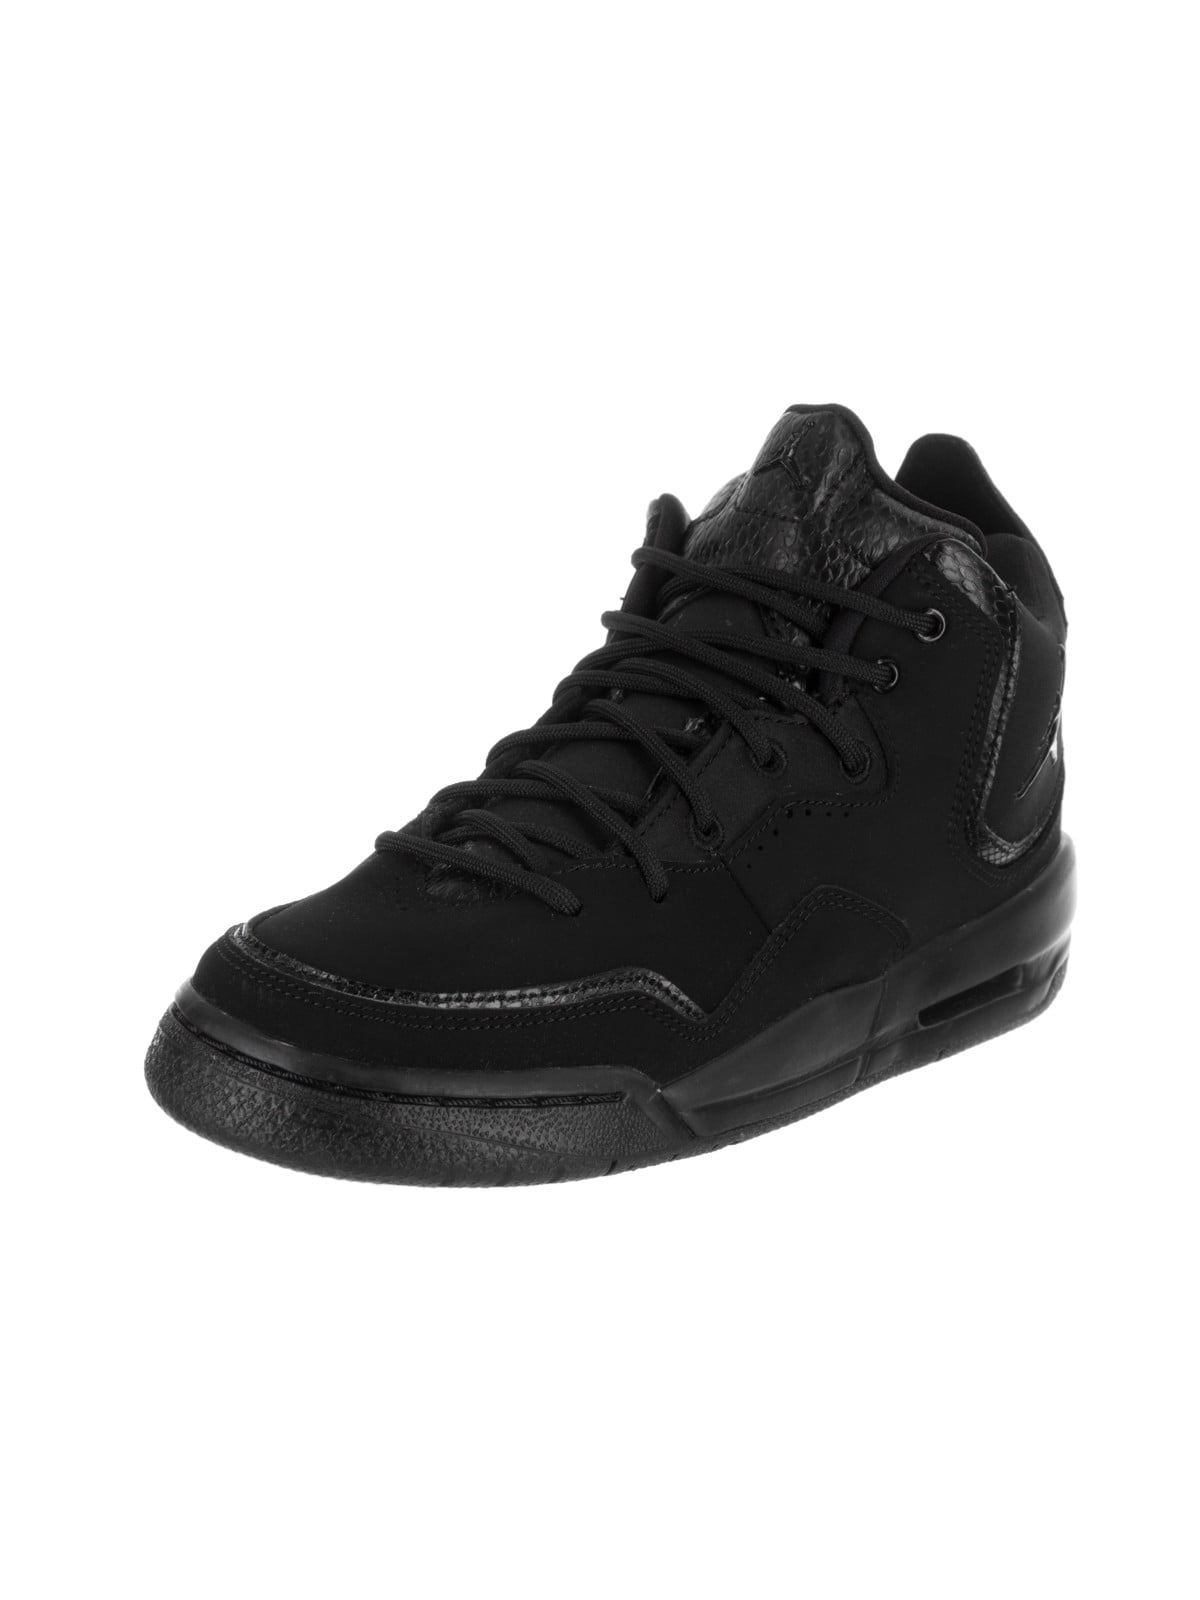 Nike Jordan Kids Jordan Courtside 23 (GS) Basketball Shoe - Walmart.com